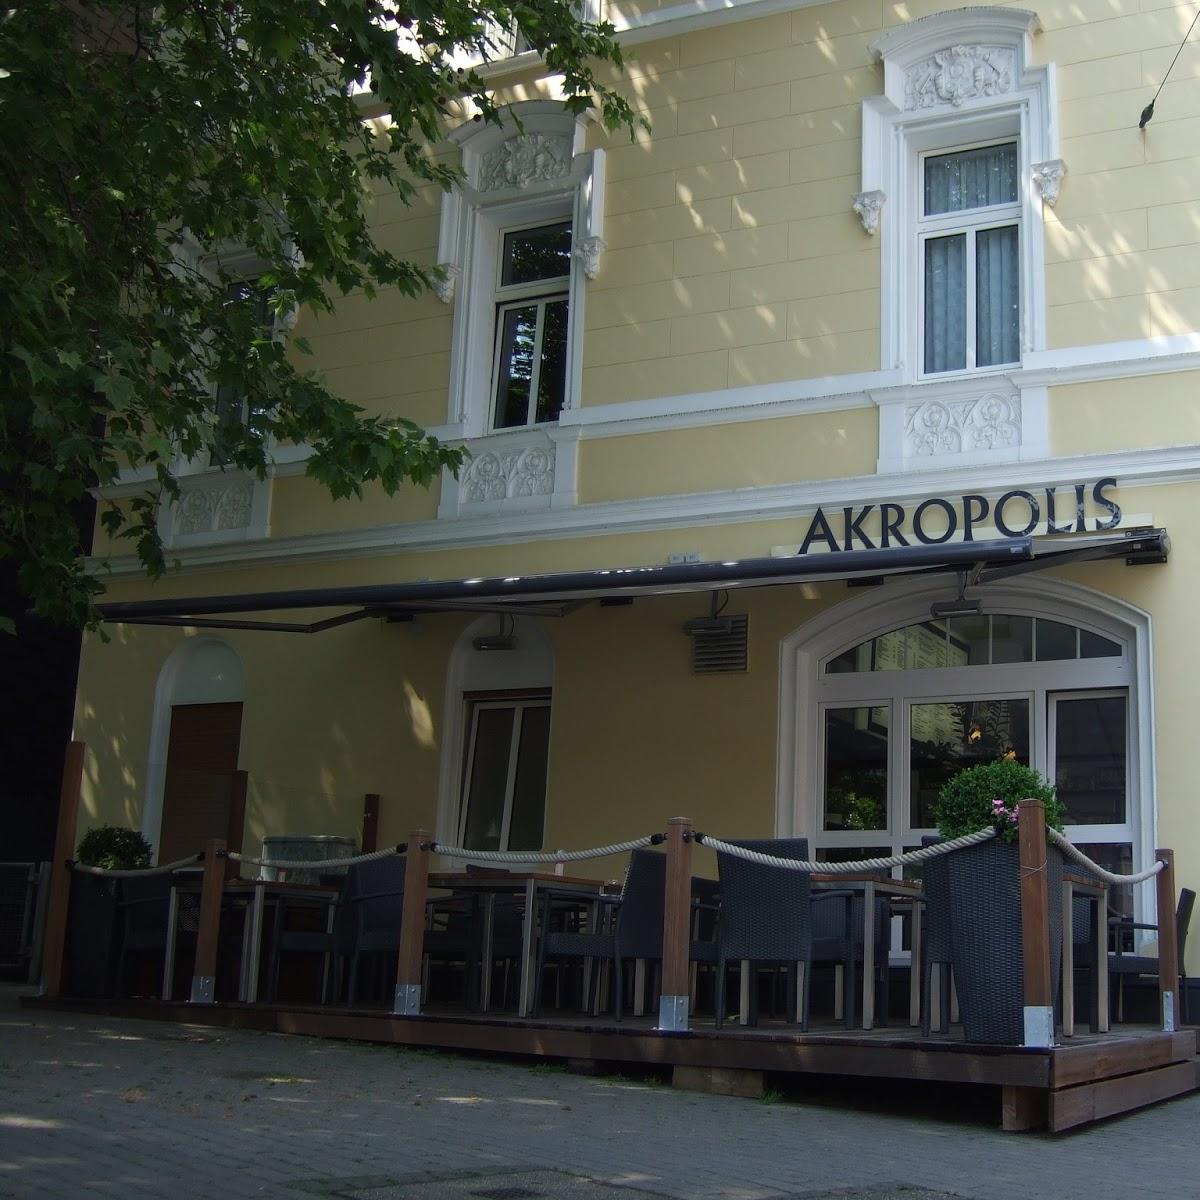 Restaurant "Akropolis" in Dortmund